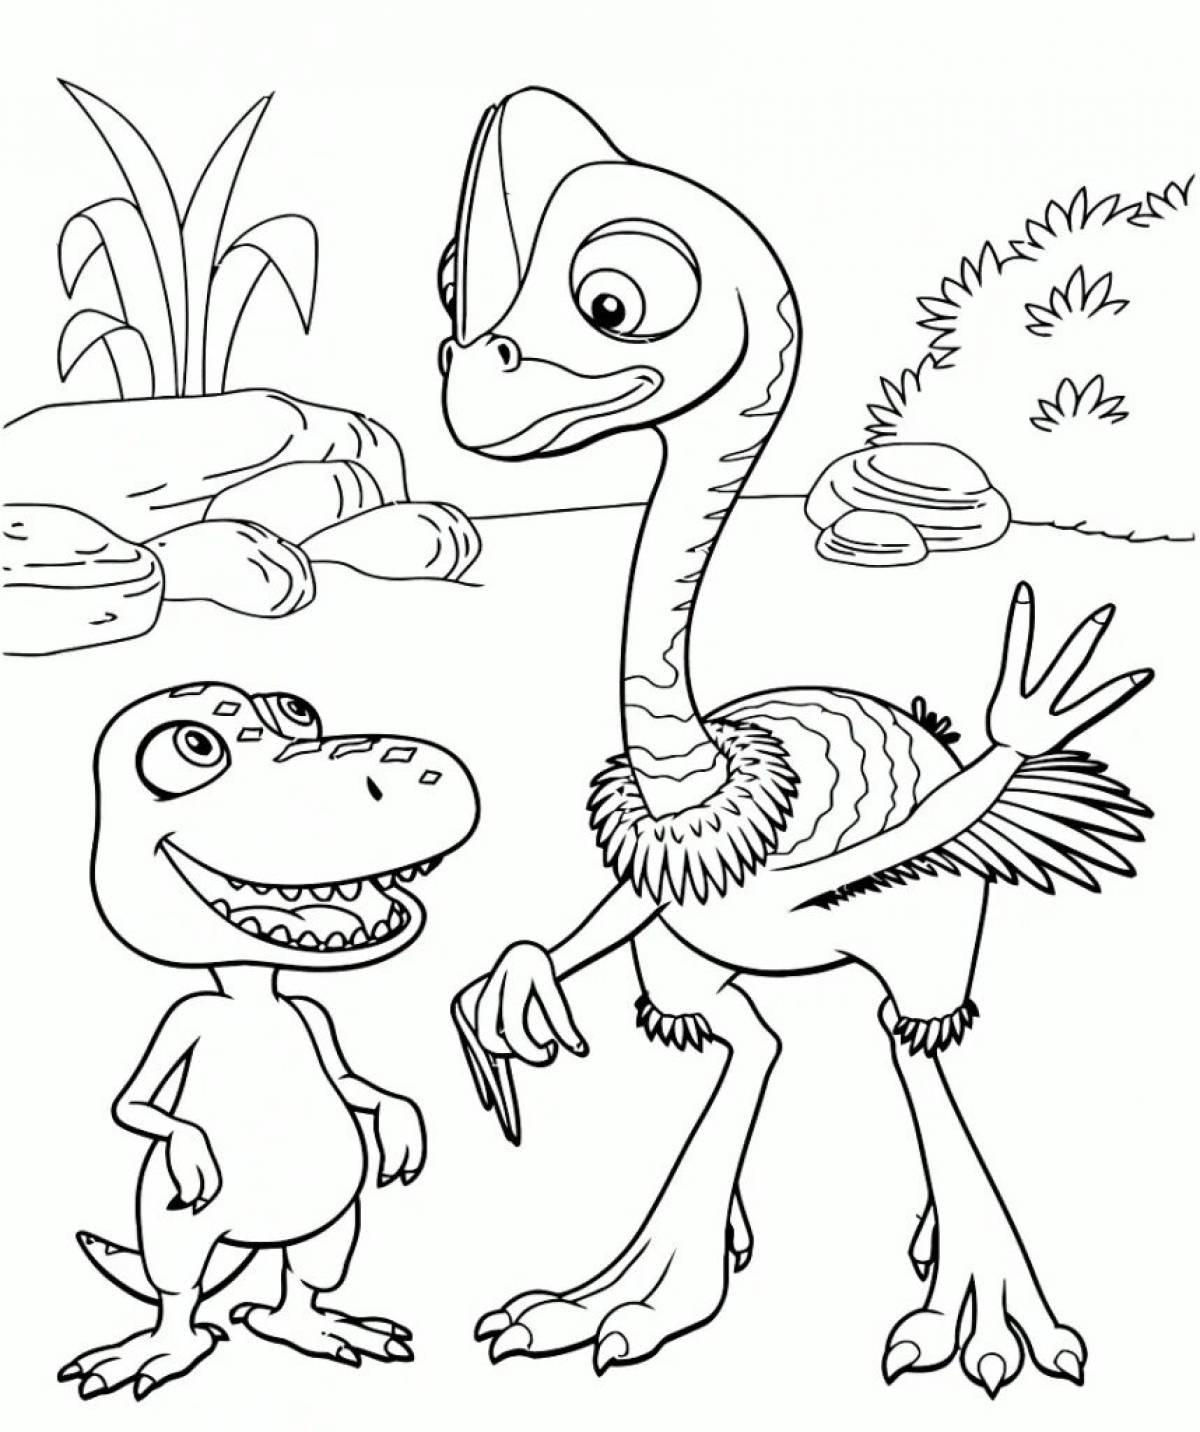 Awesome cartoon dinosaur coloring book